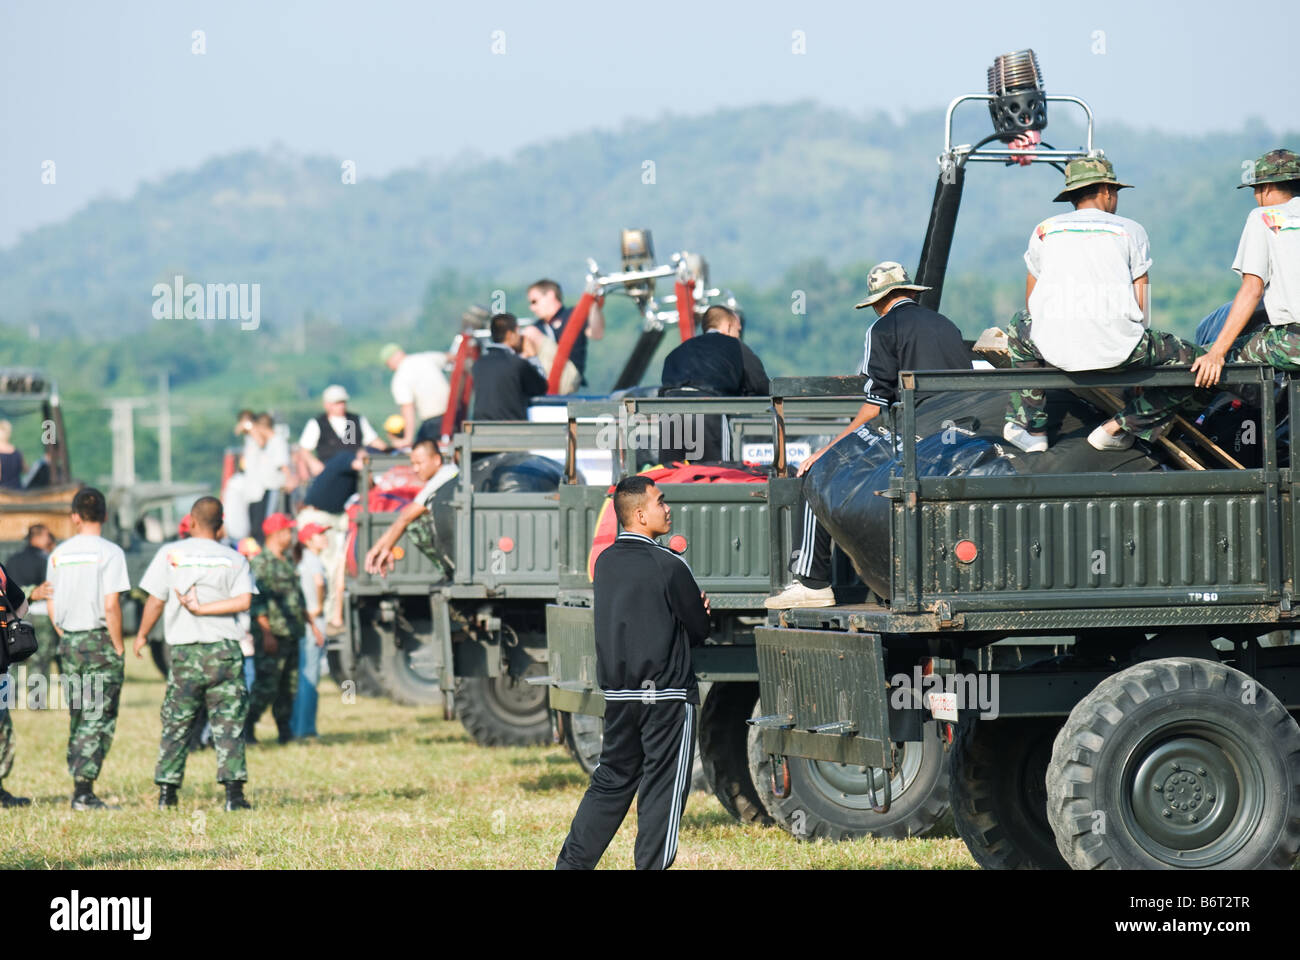 Military trucks Mercedes Benz Unimog carrying hot air balloons Stock Photo